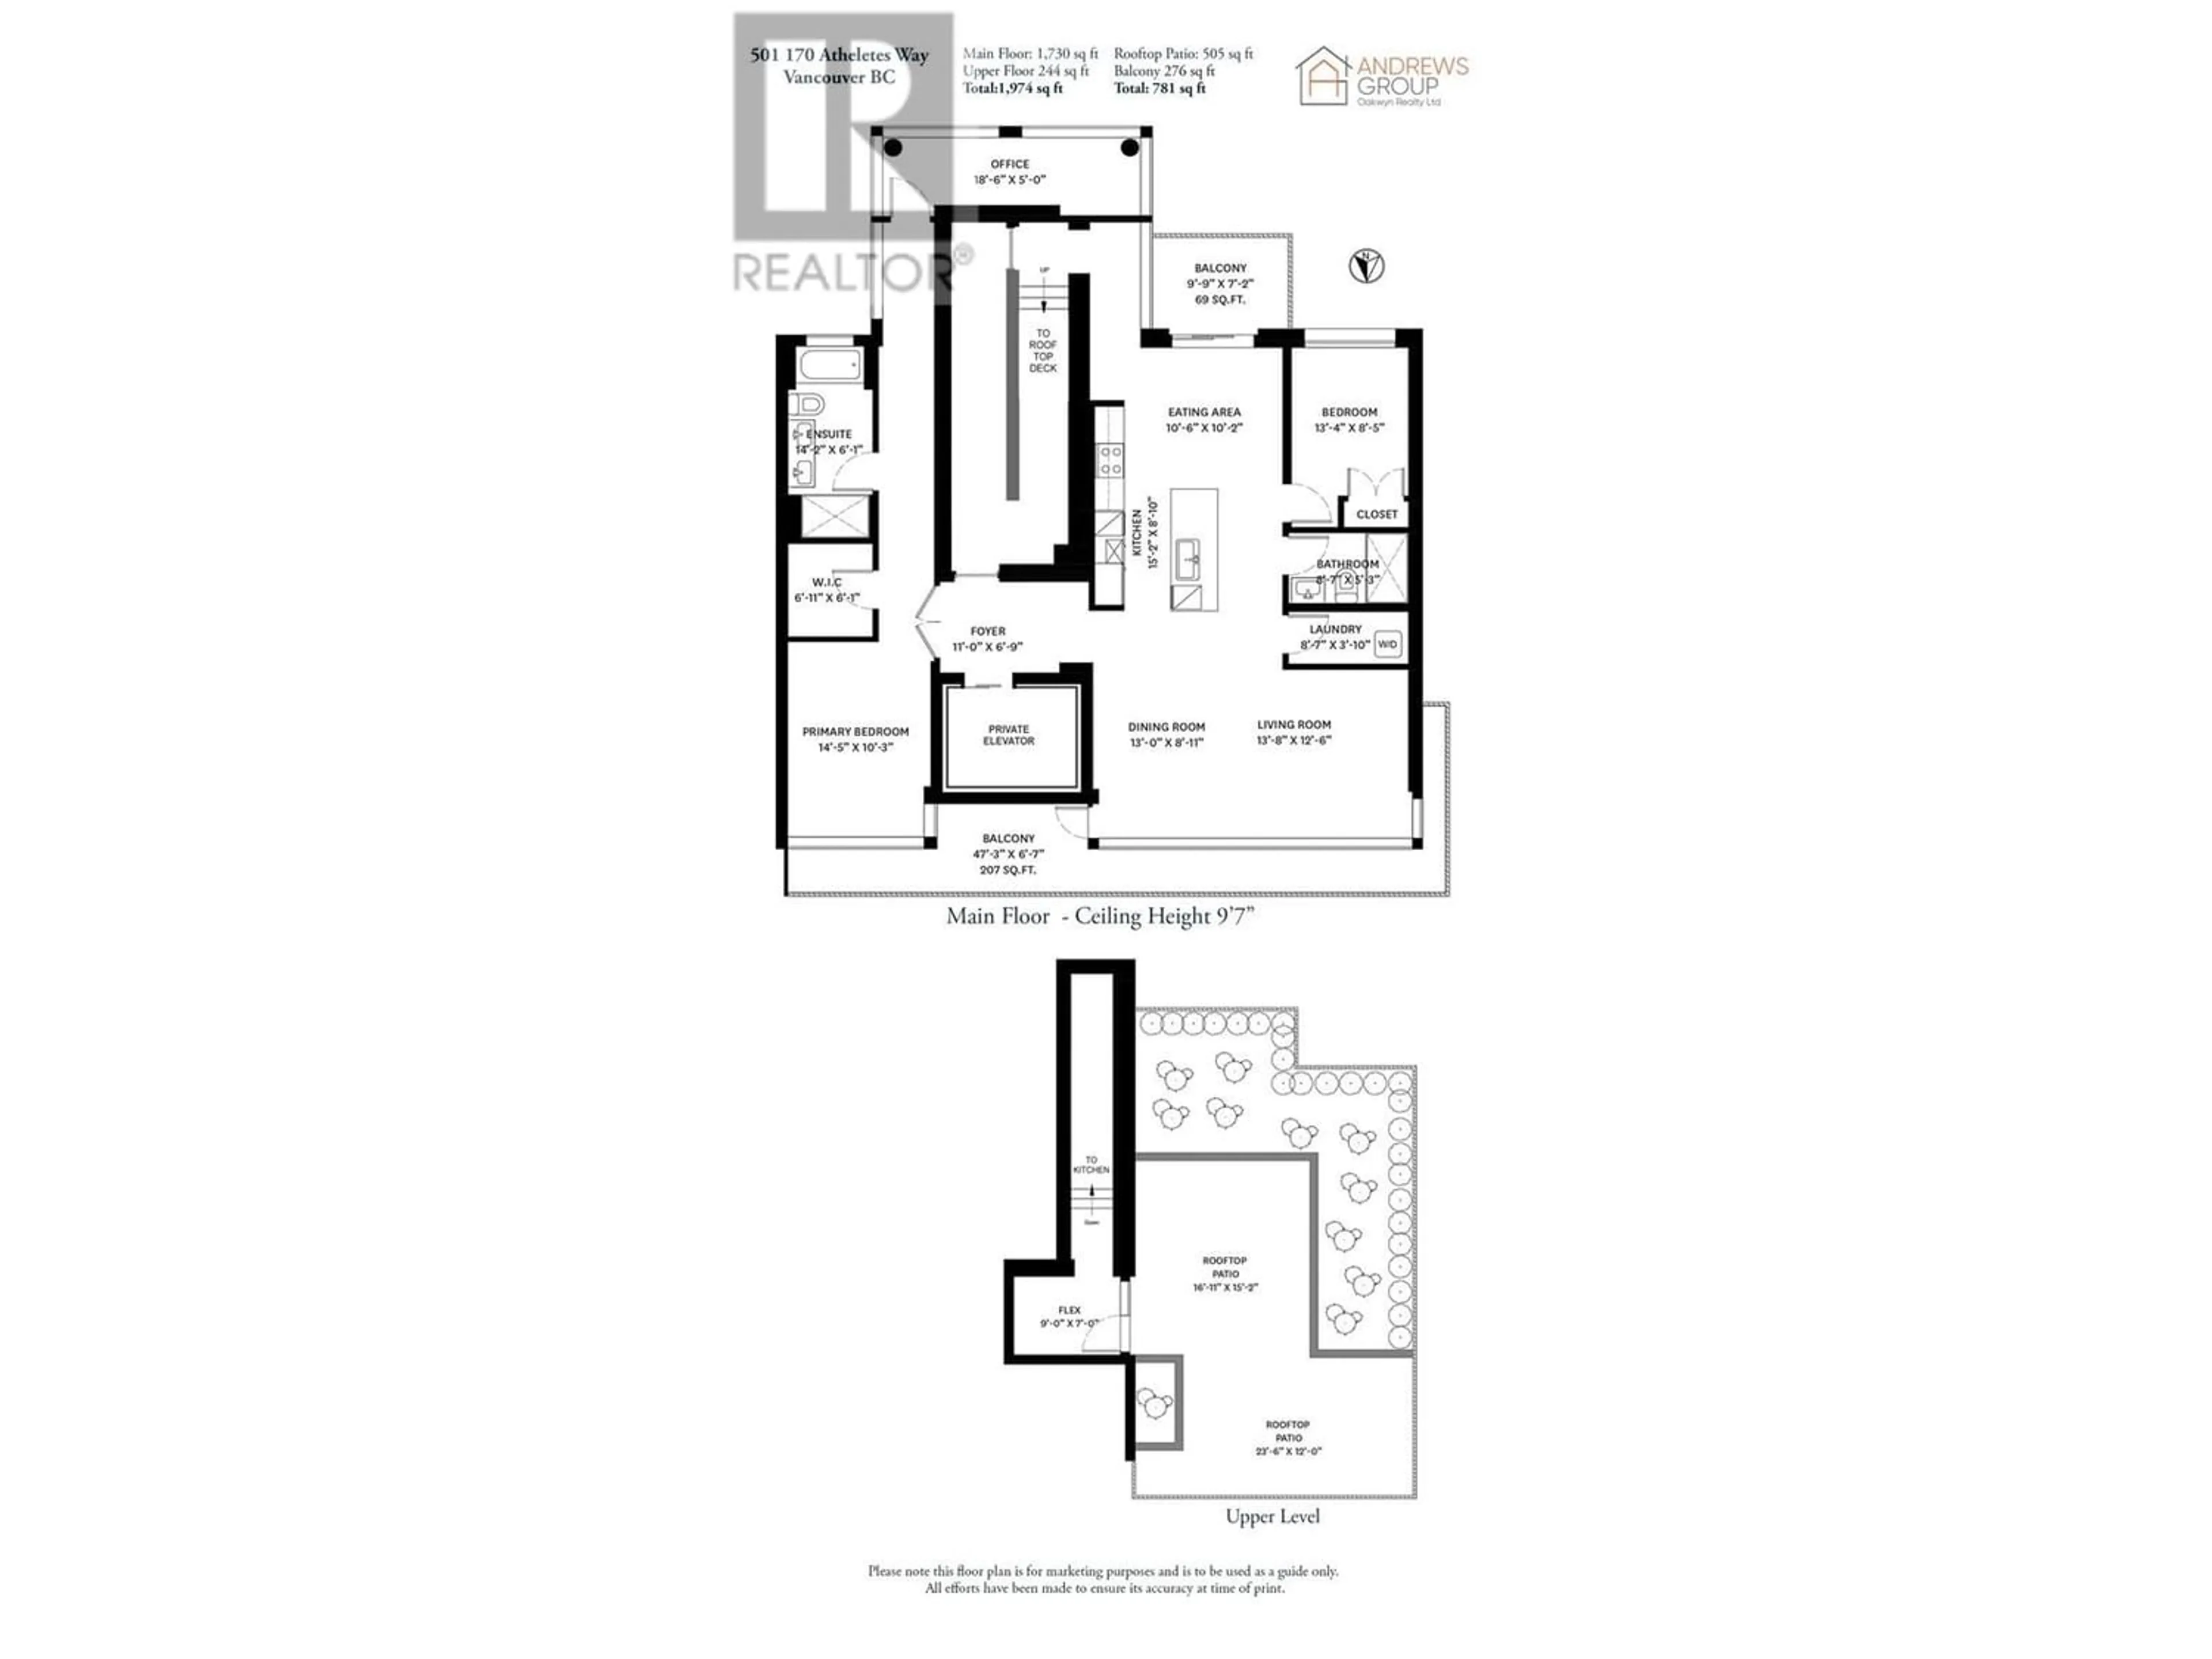 Floor plan for 501 170 ATHLETES WAY, Vancouver British Columbia V5Y0B5